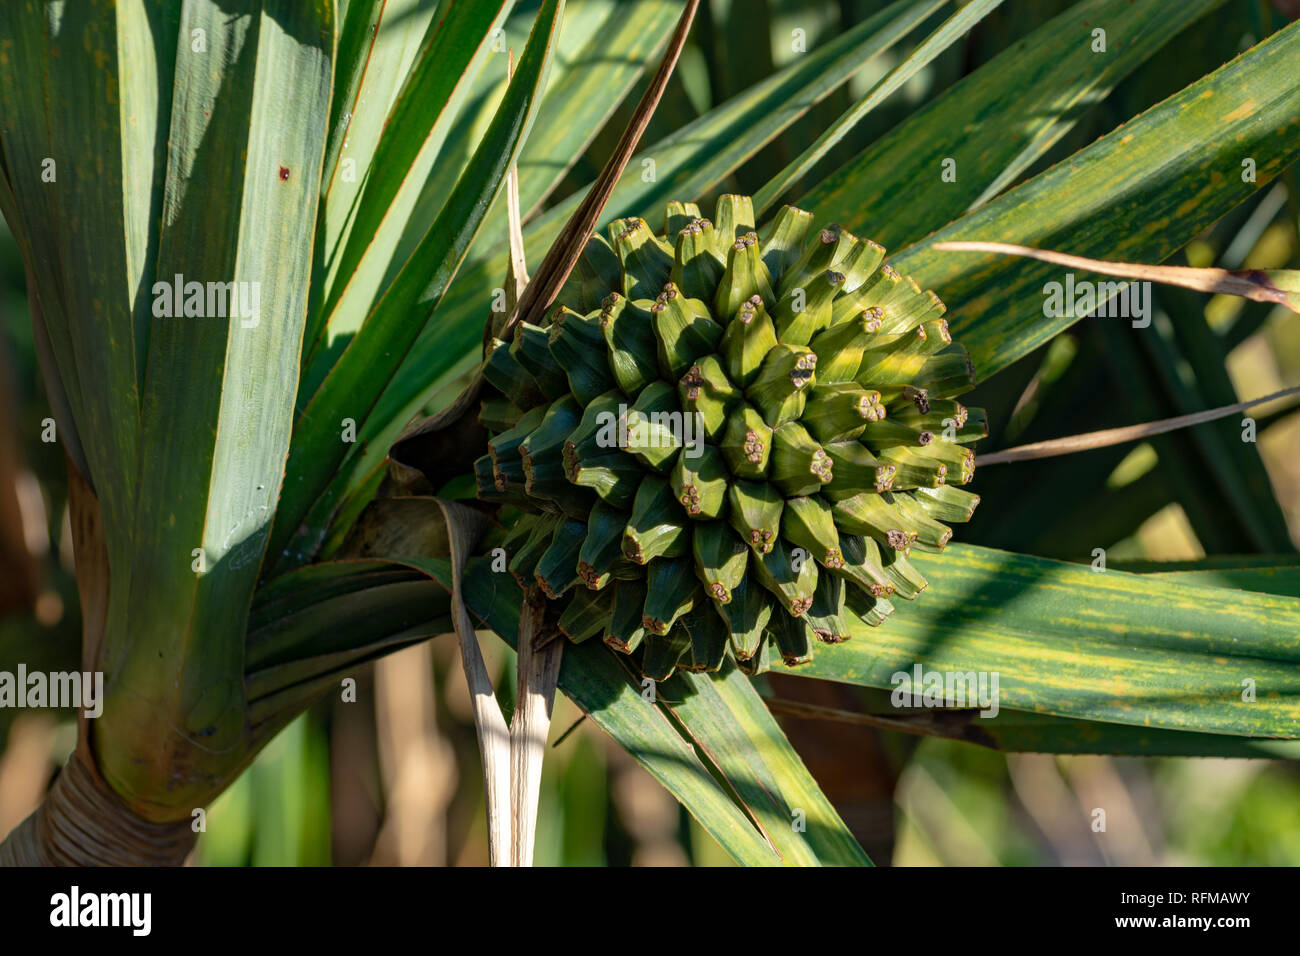 Pandanus utilis or screwpine plant with fruits growing in garde, origin Madagascar close up Stock Photo